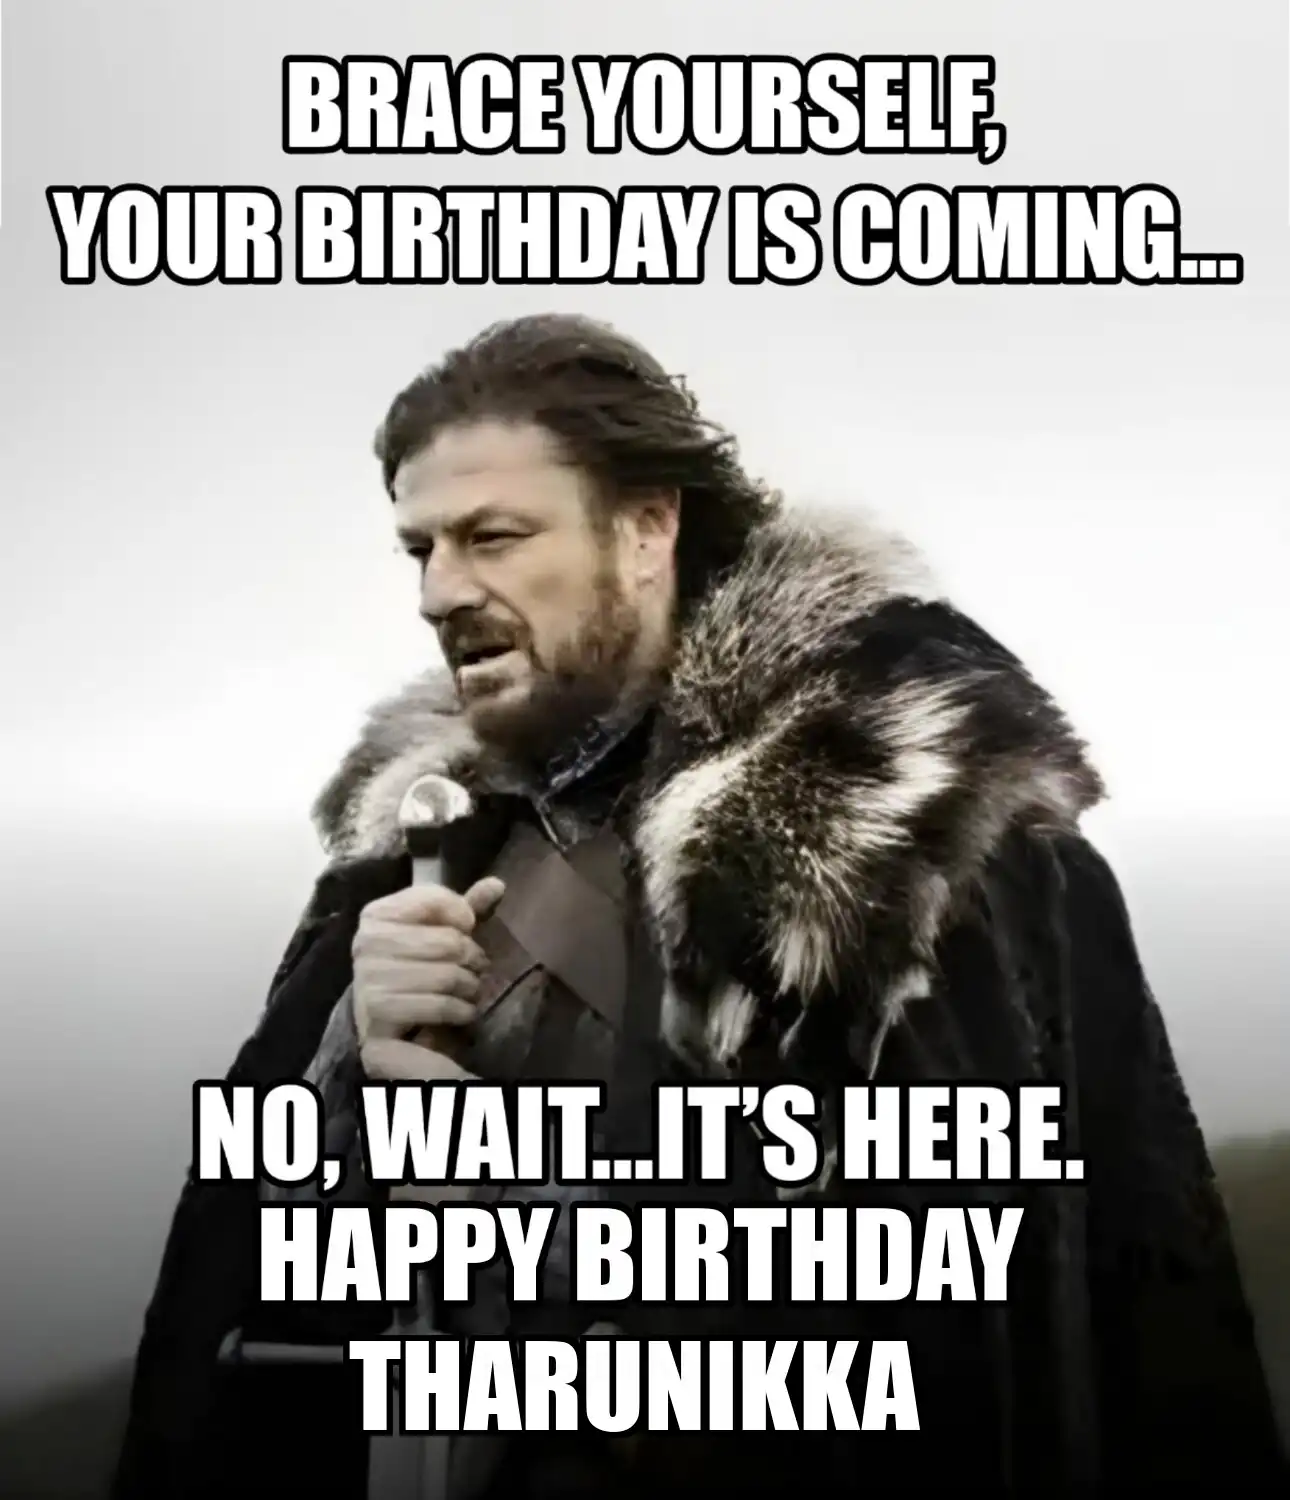 Happy Birthday Tharunikka Brace Yourself Your Birthday Is Coming Meme